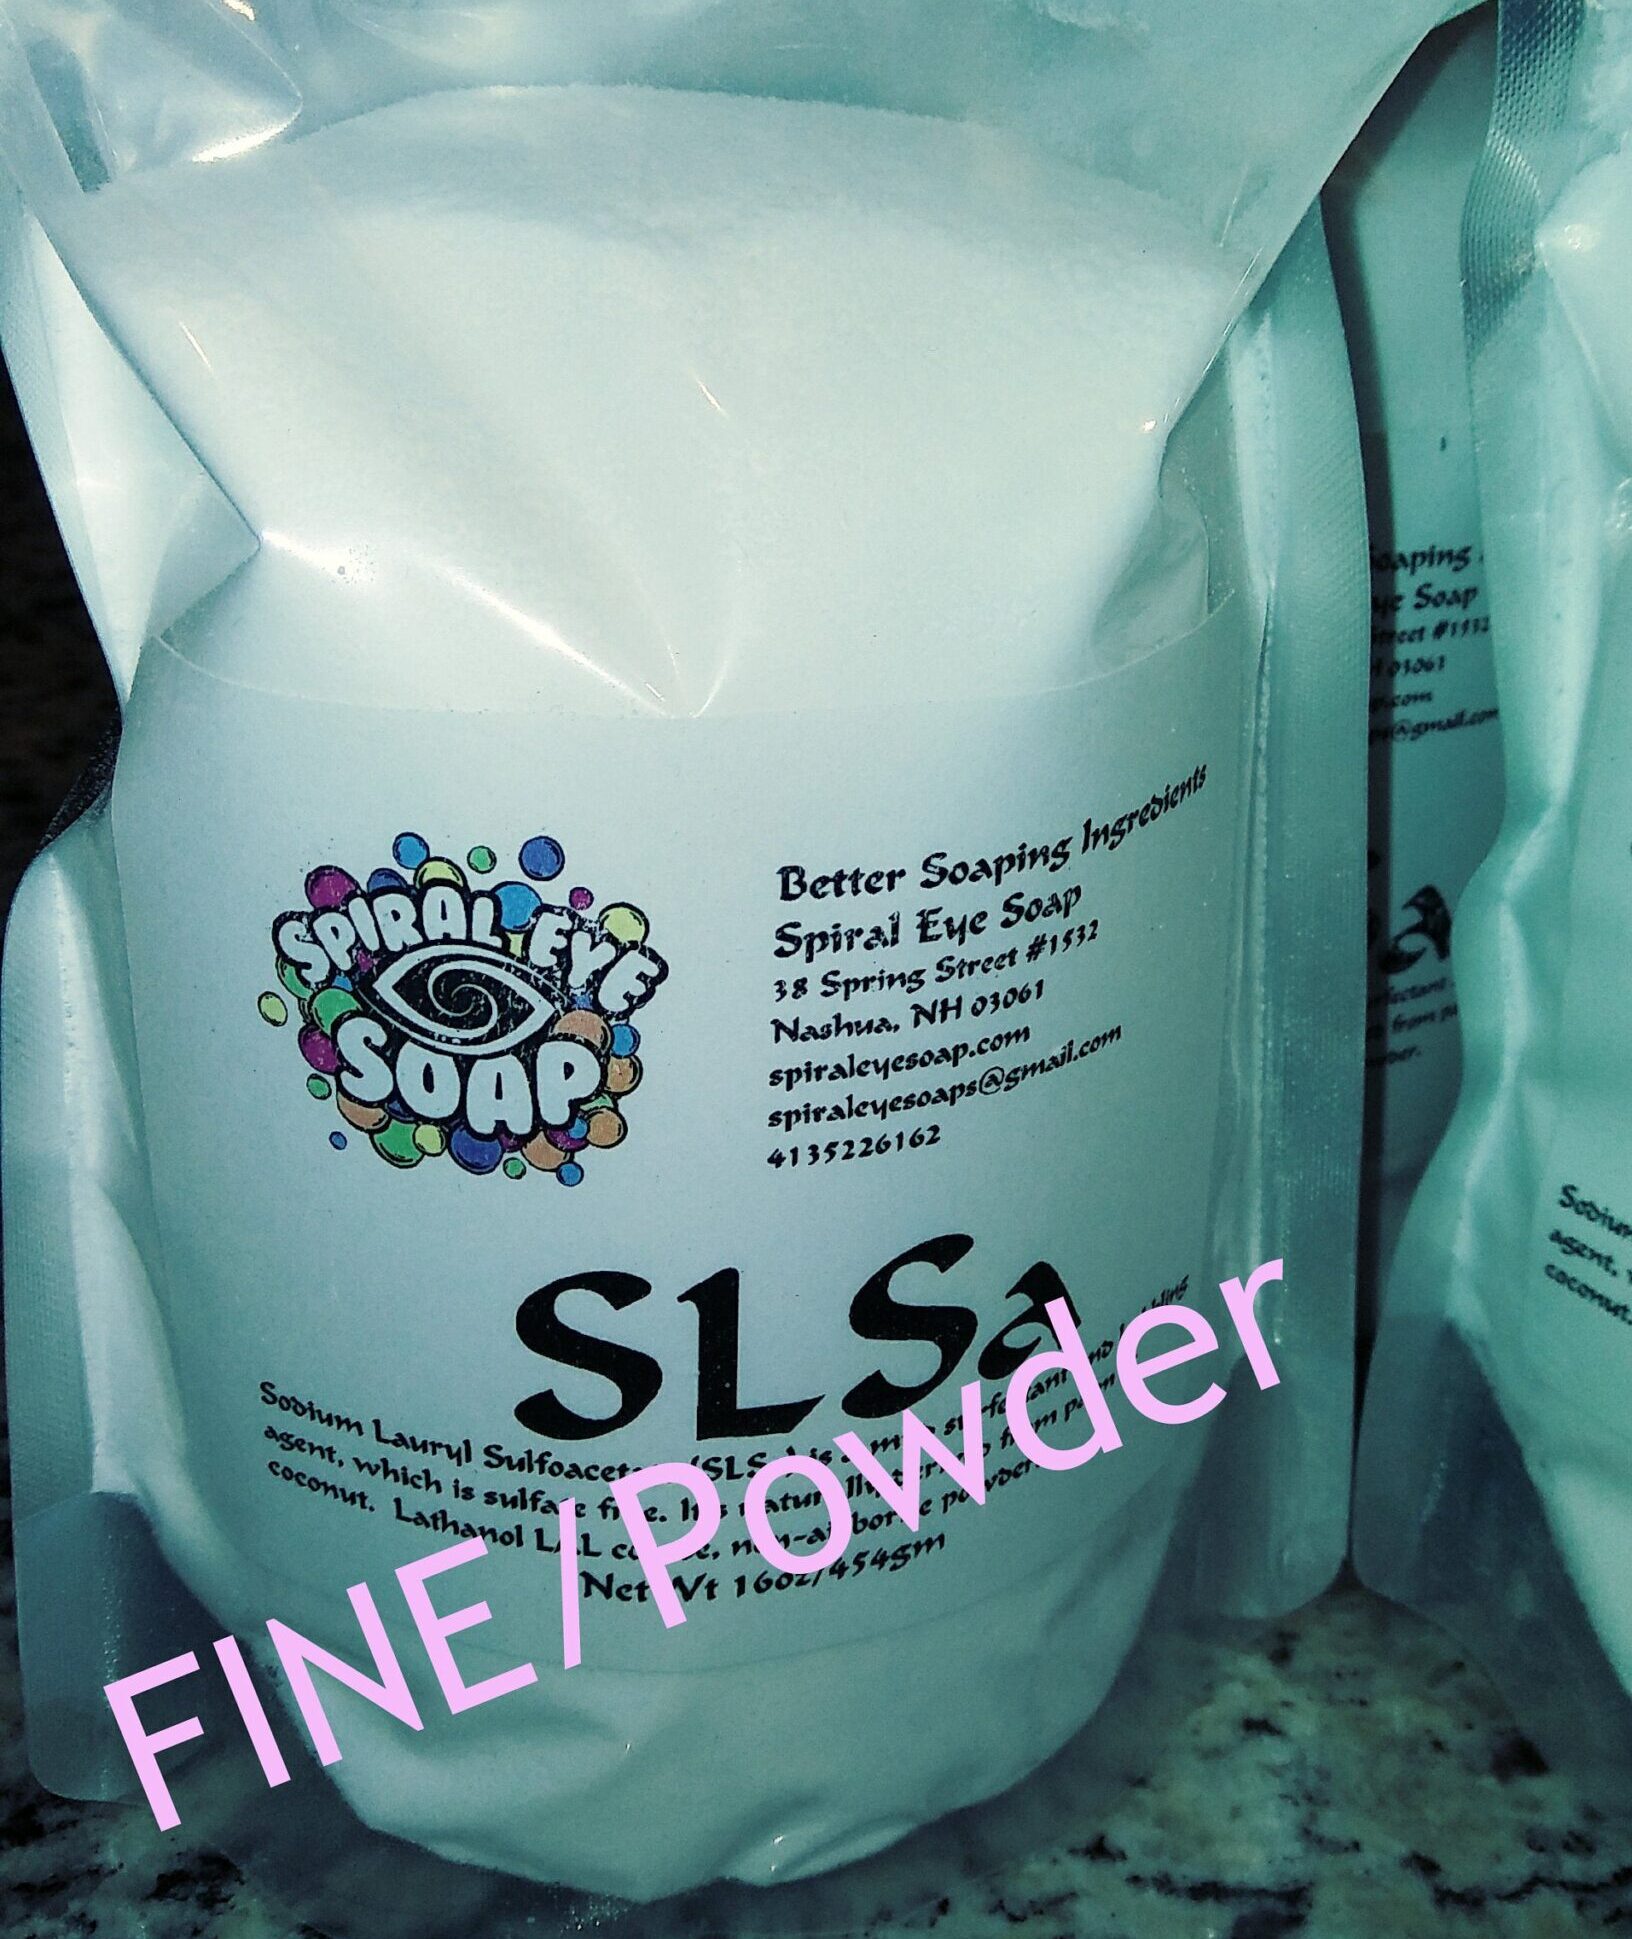 5.2 Pound Slsa Powder for Making Bath Bombs, Premium Slsa Sodium Lauryl Sulfoacetate Powder, Amazing Bubbles, Gentle on Skin, Suitable for Making